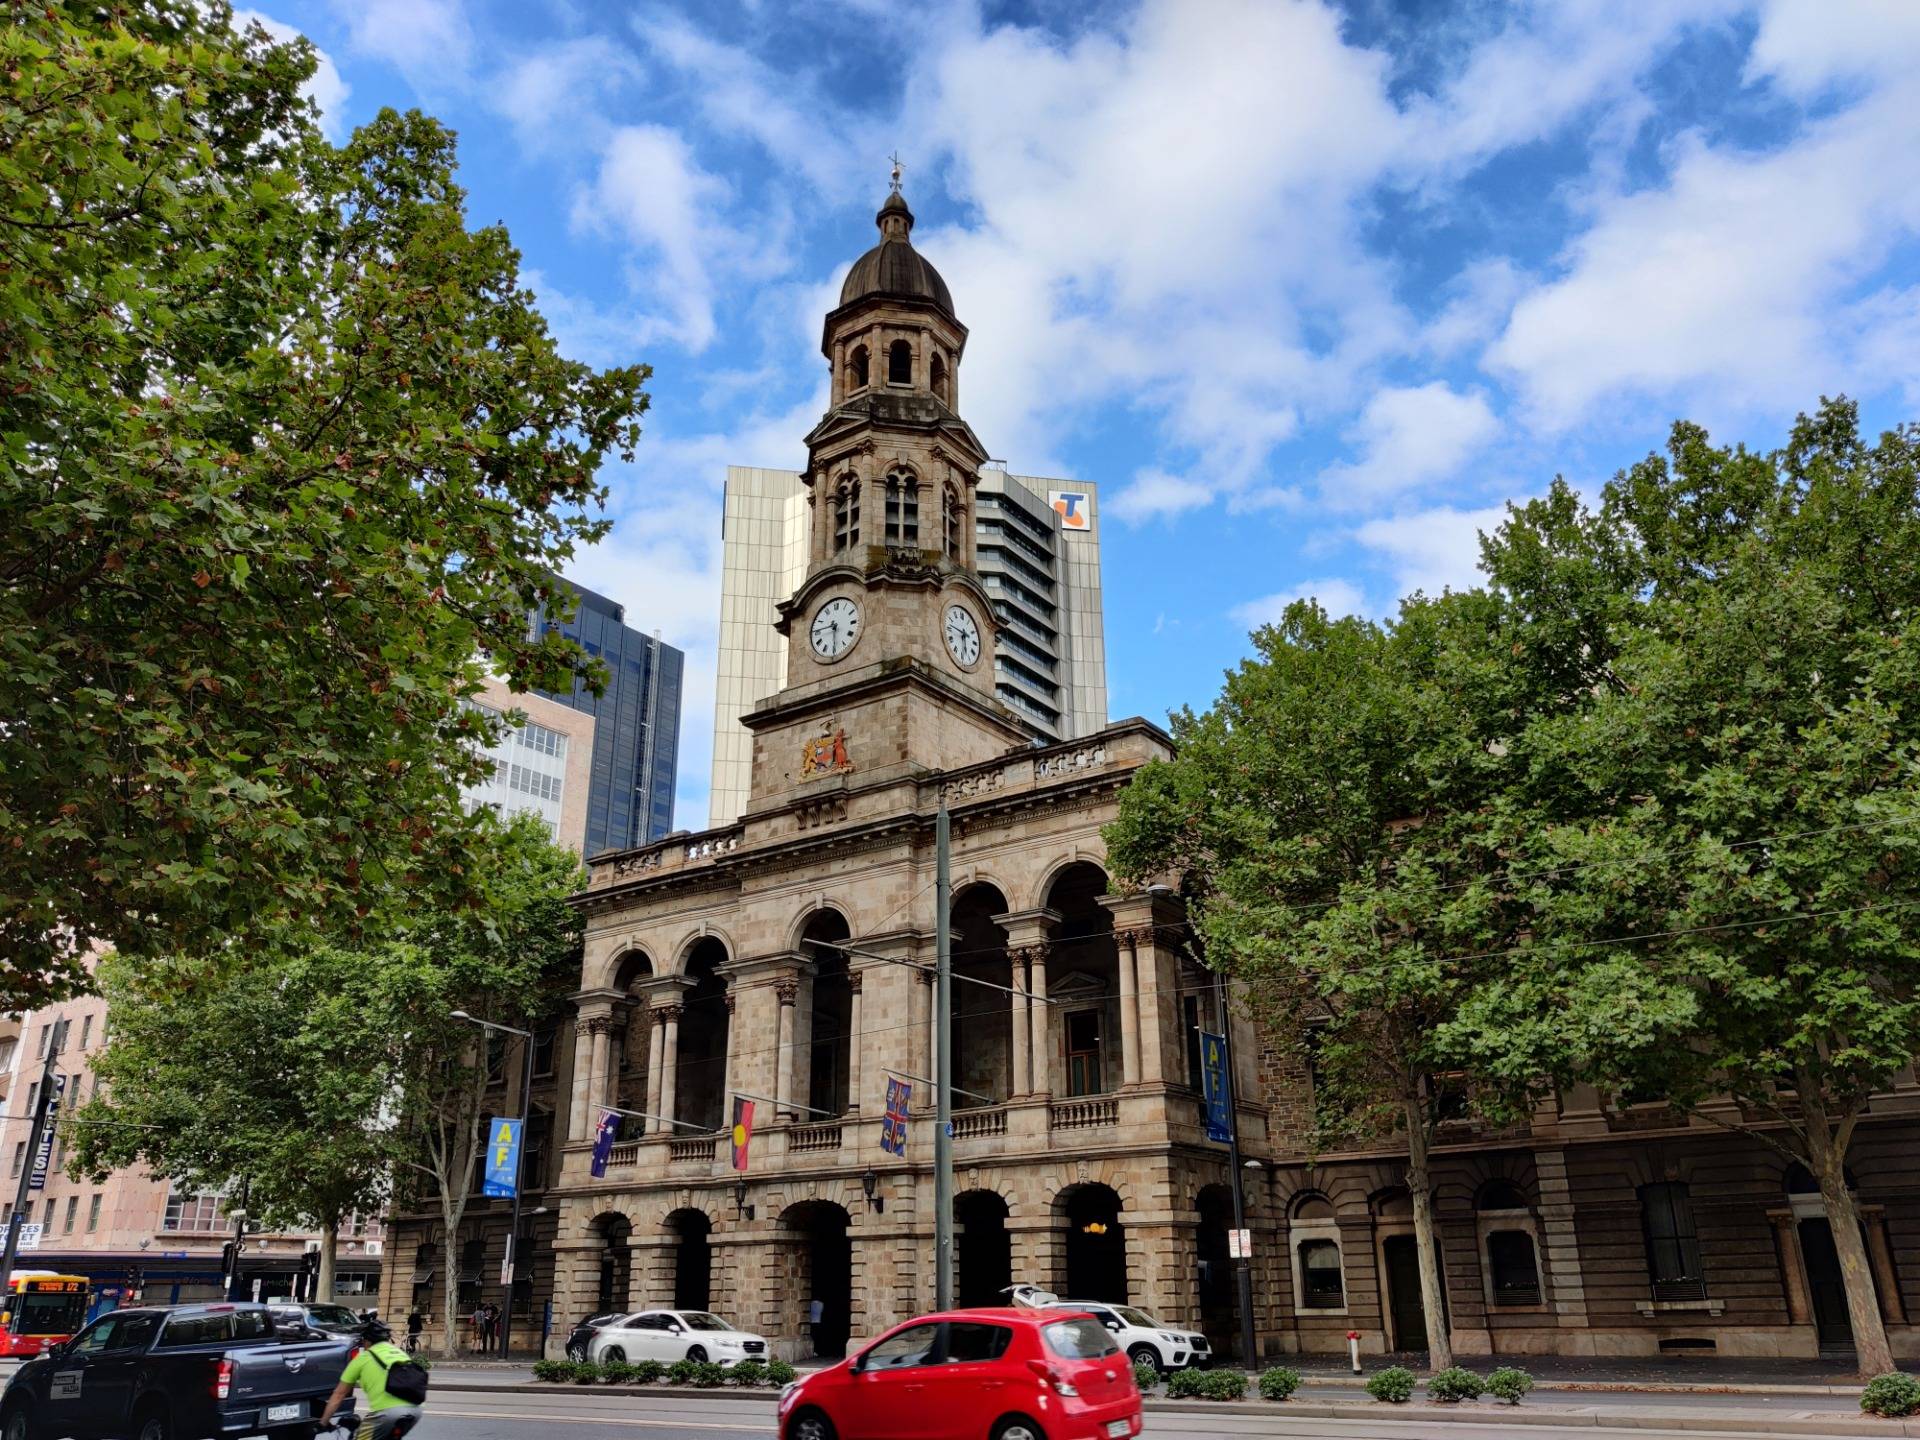 Adelaide Town Hall: Adelaide, AUSTRALIA